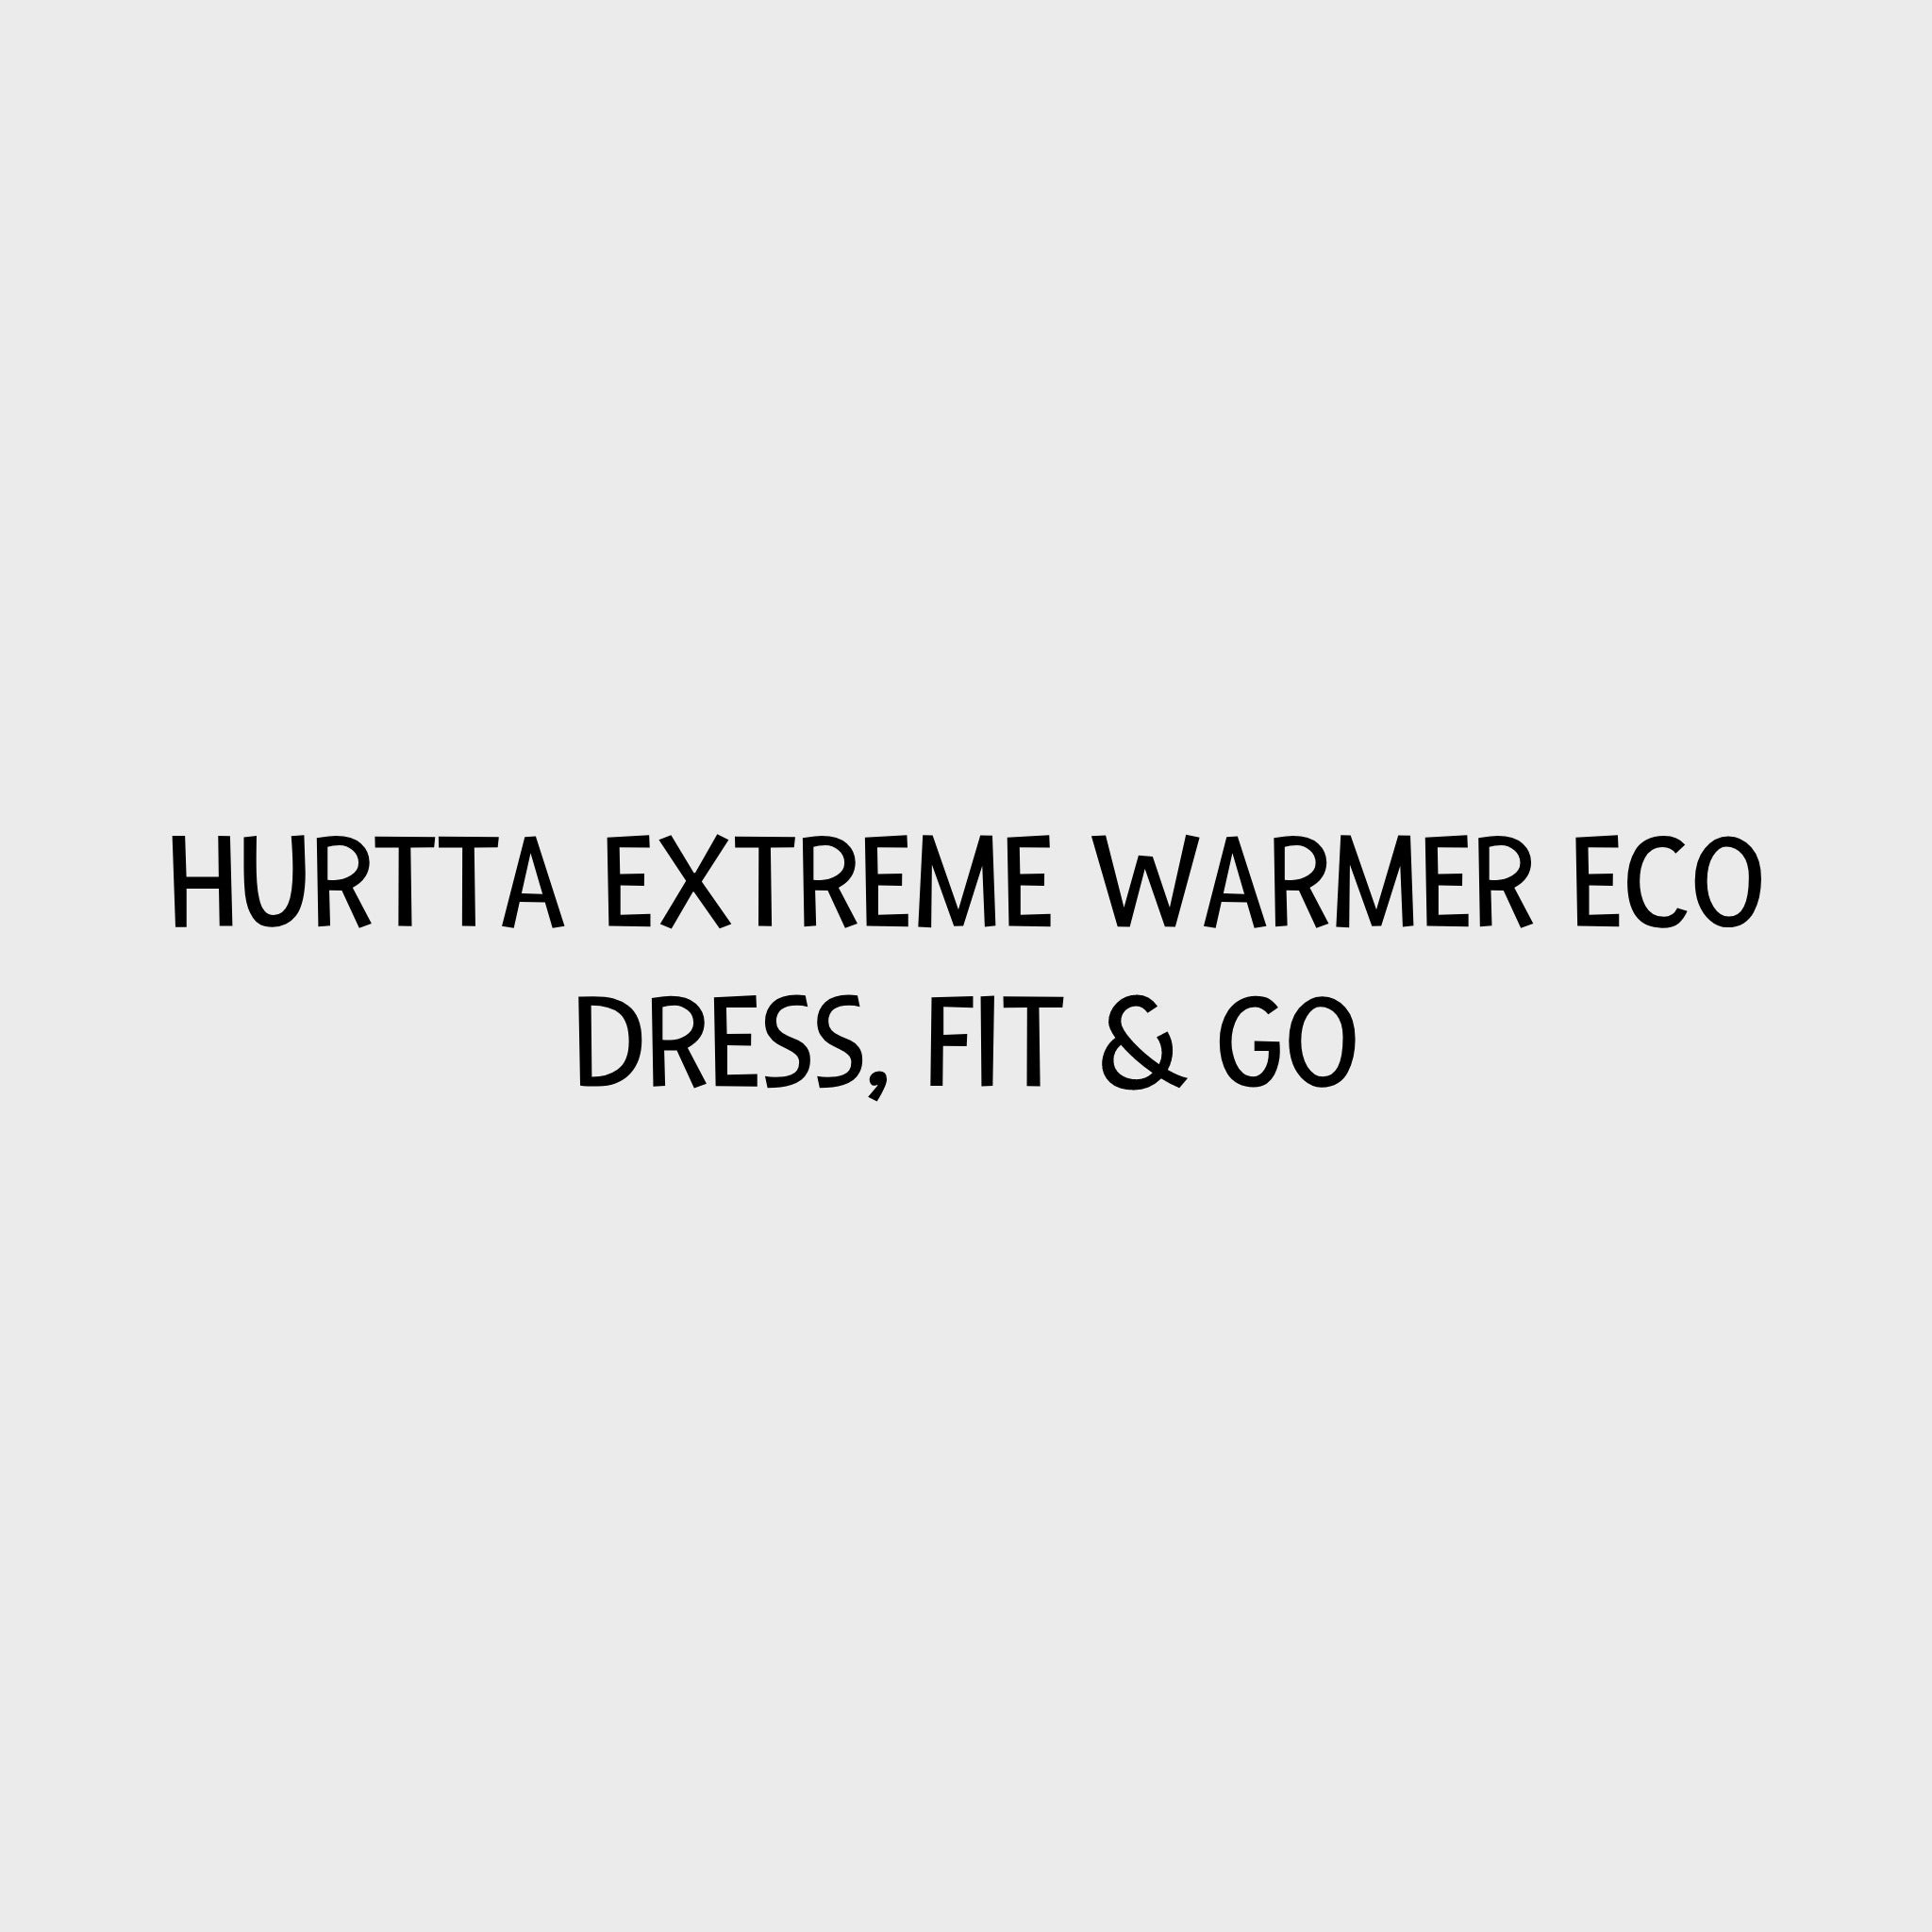 Video - Hurtta Extreme Warmer ECO - Dress, Fit & Go